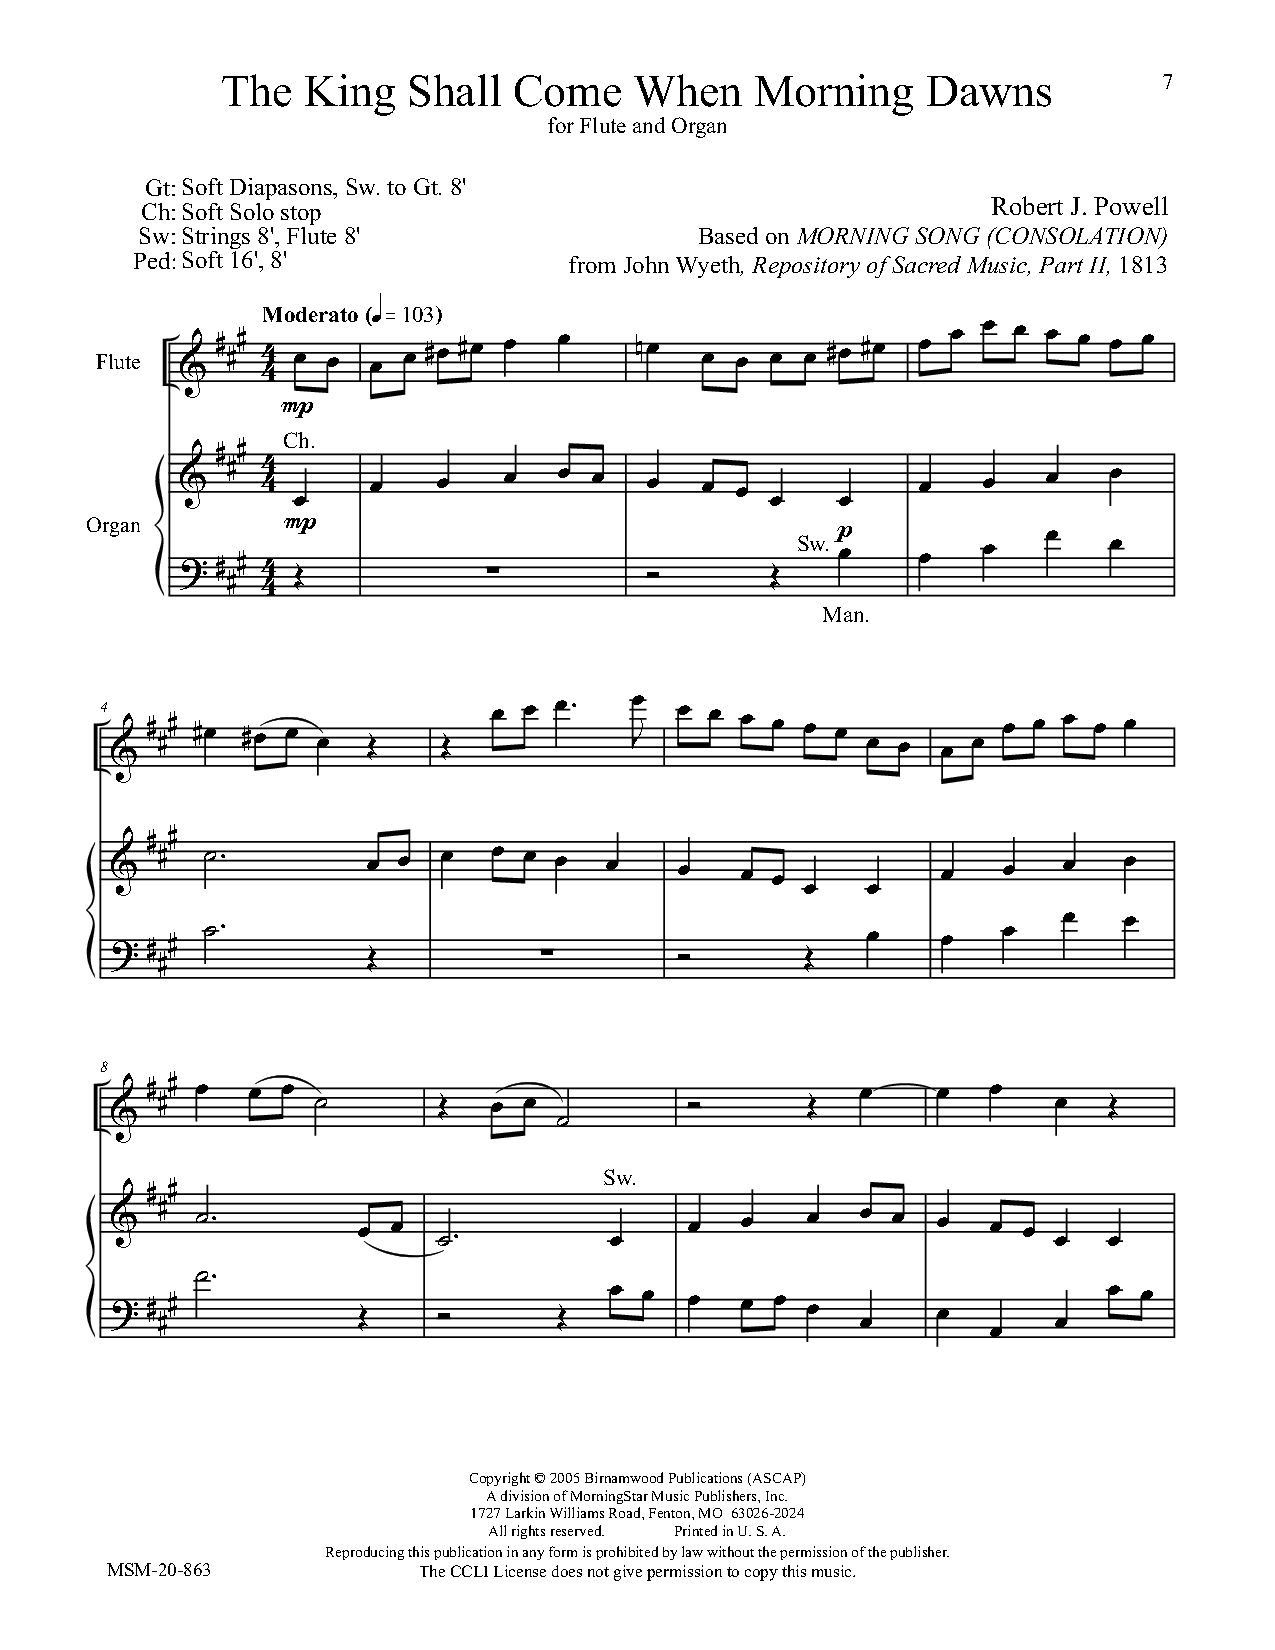 O God Beyond All Praising: Hymn Settings for Flute and Organ